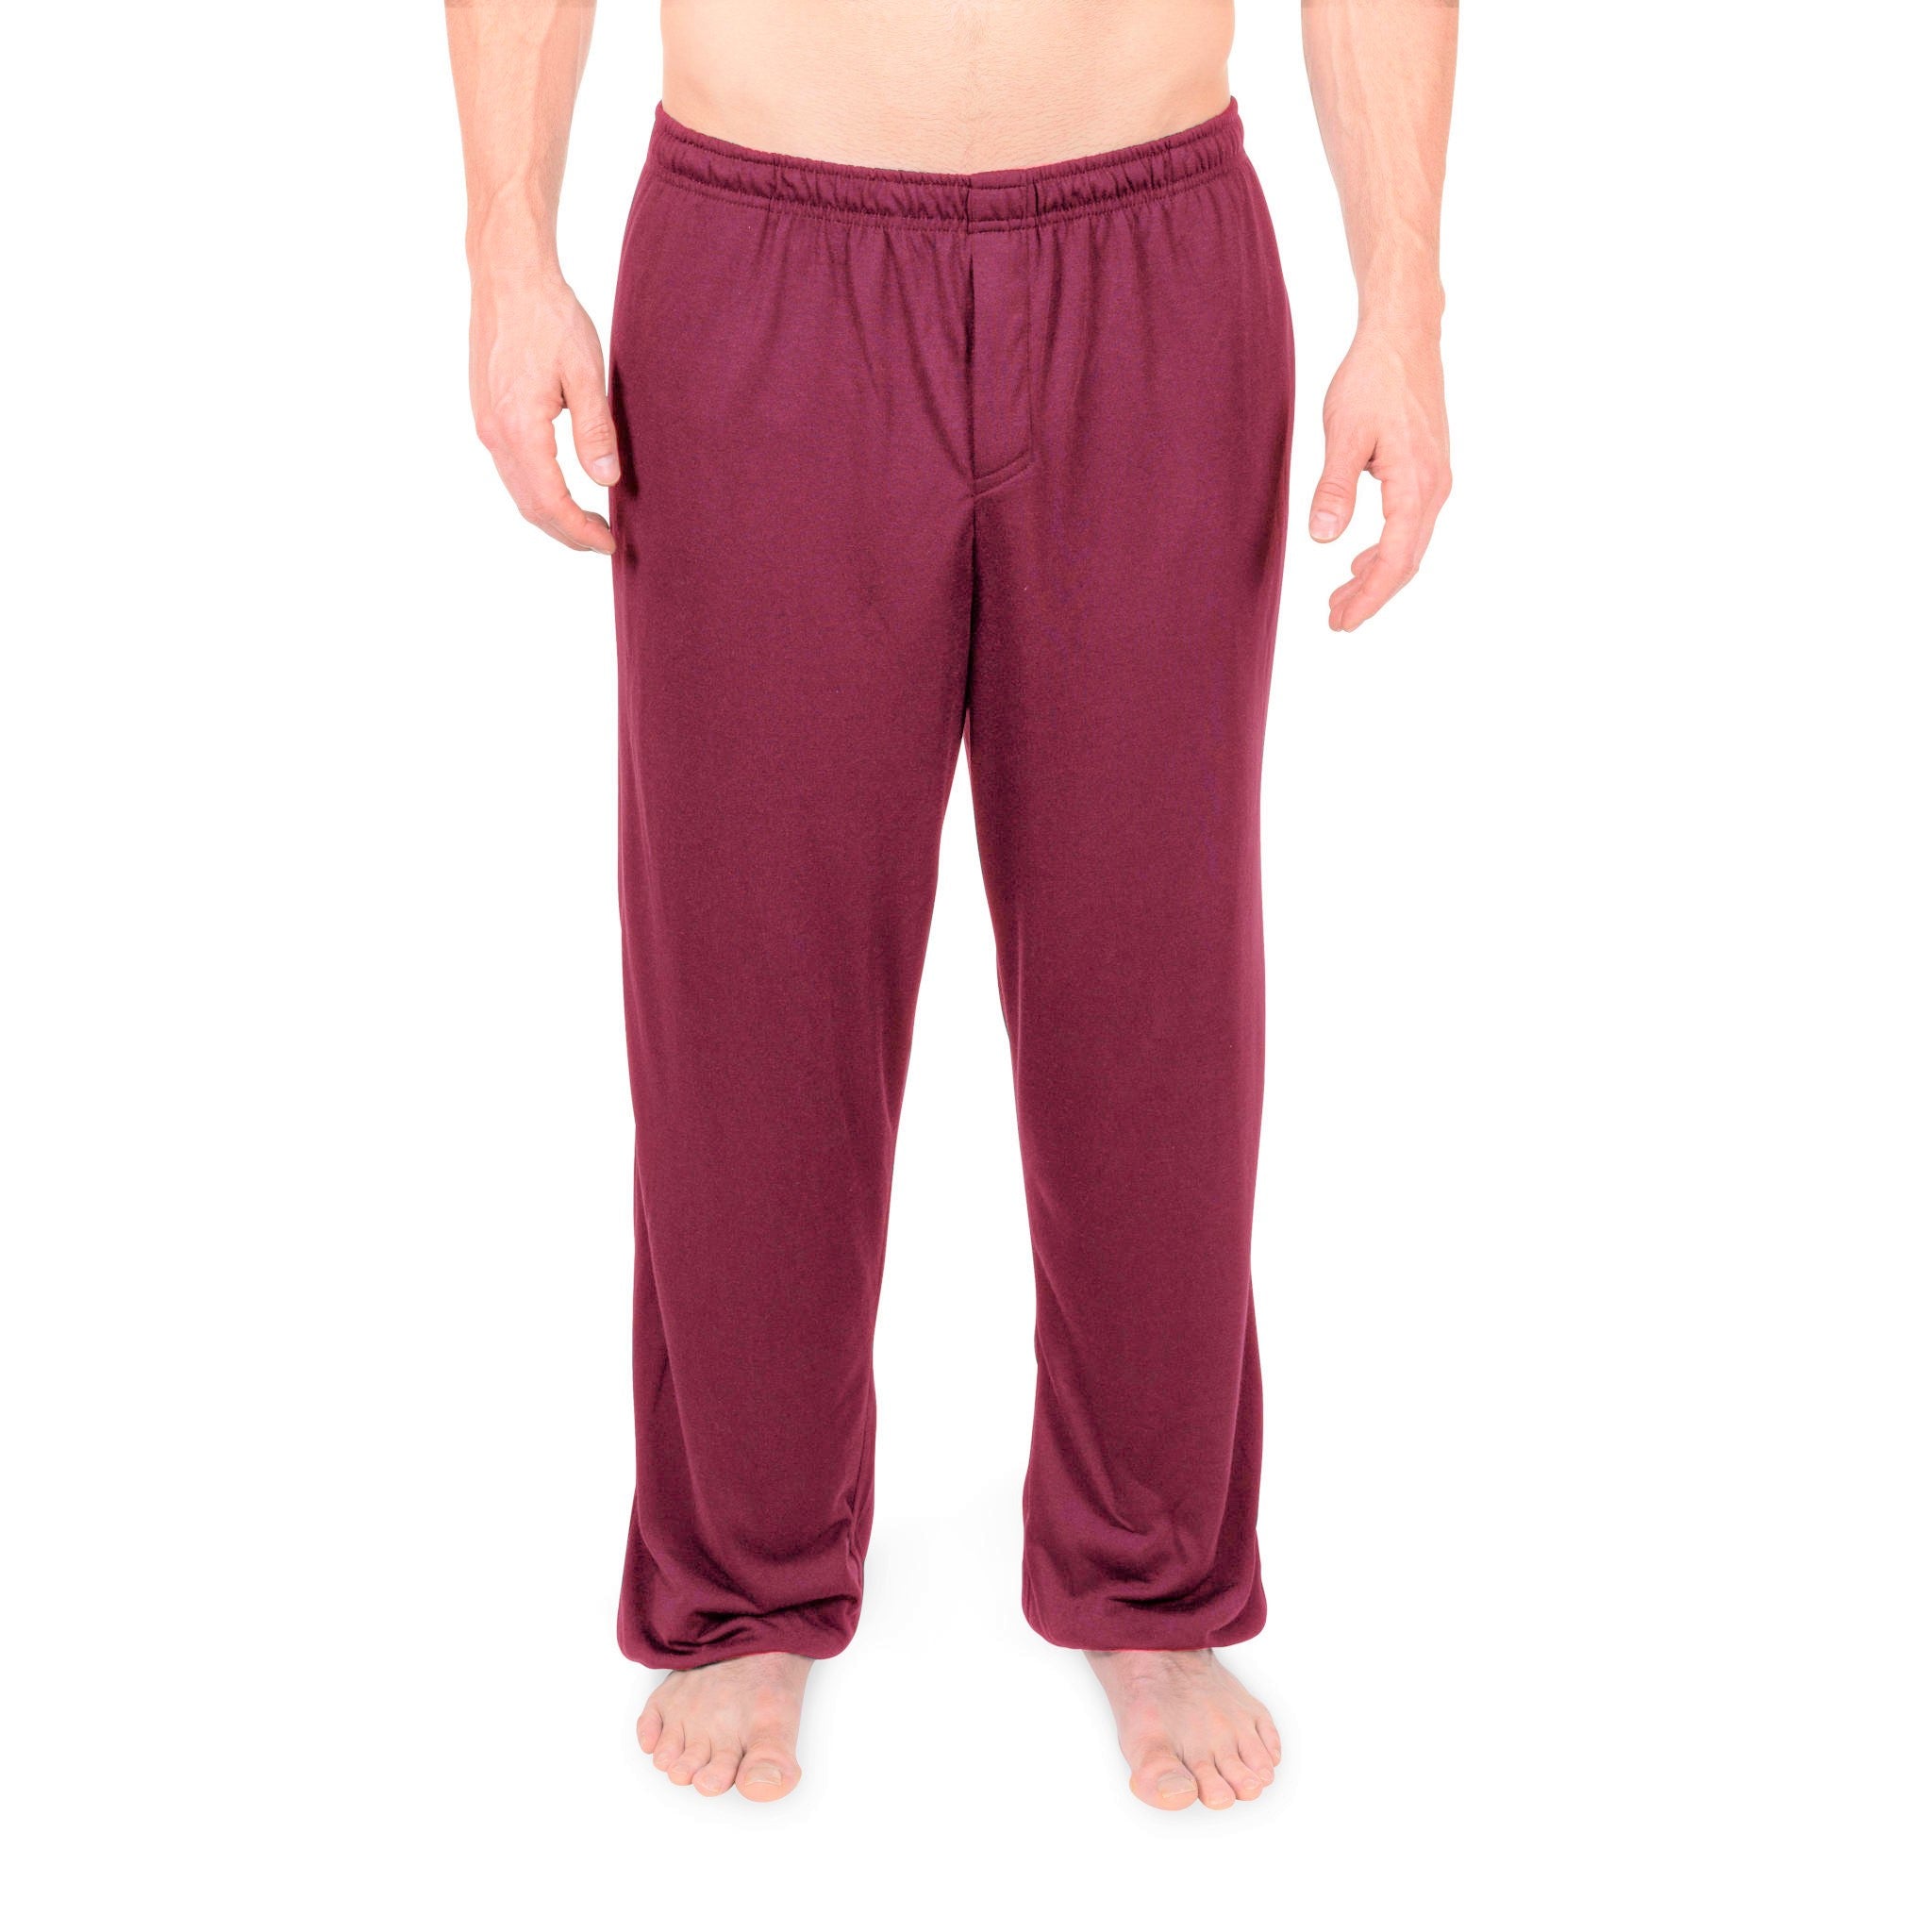 Buy Fflirtygo Men's Cotton Pyjama Bottom, 100% Hosiery Cotton Export  Quality Fabric, Red and Black Stripe Printed Pyjama for Men, Men�s Leisure  Wear, Night Wear Pajama at Amazon.in